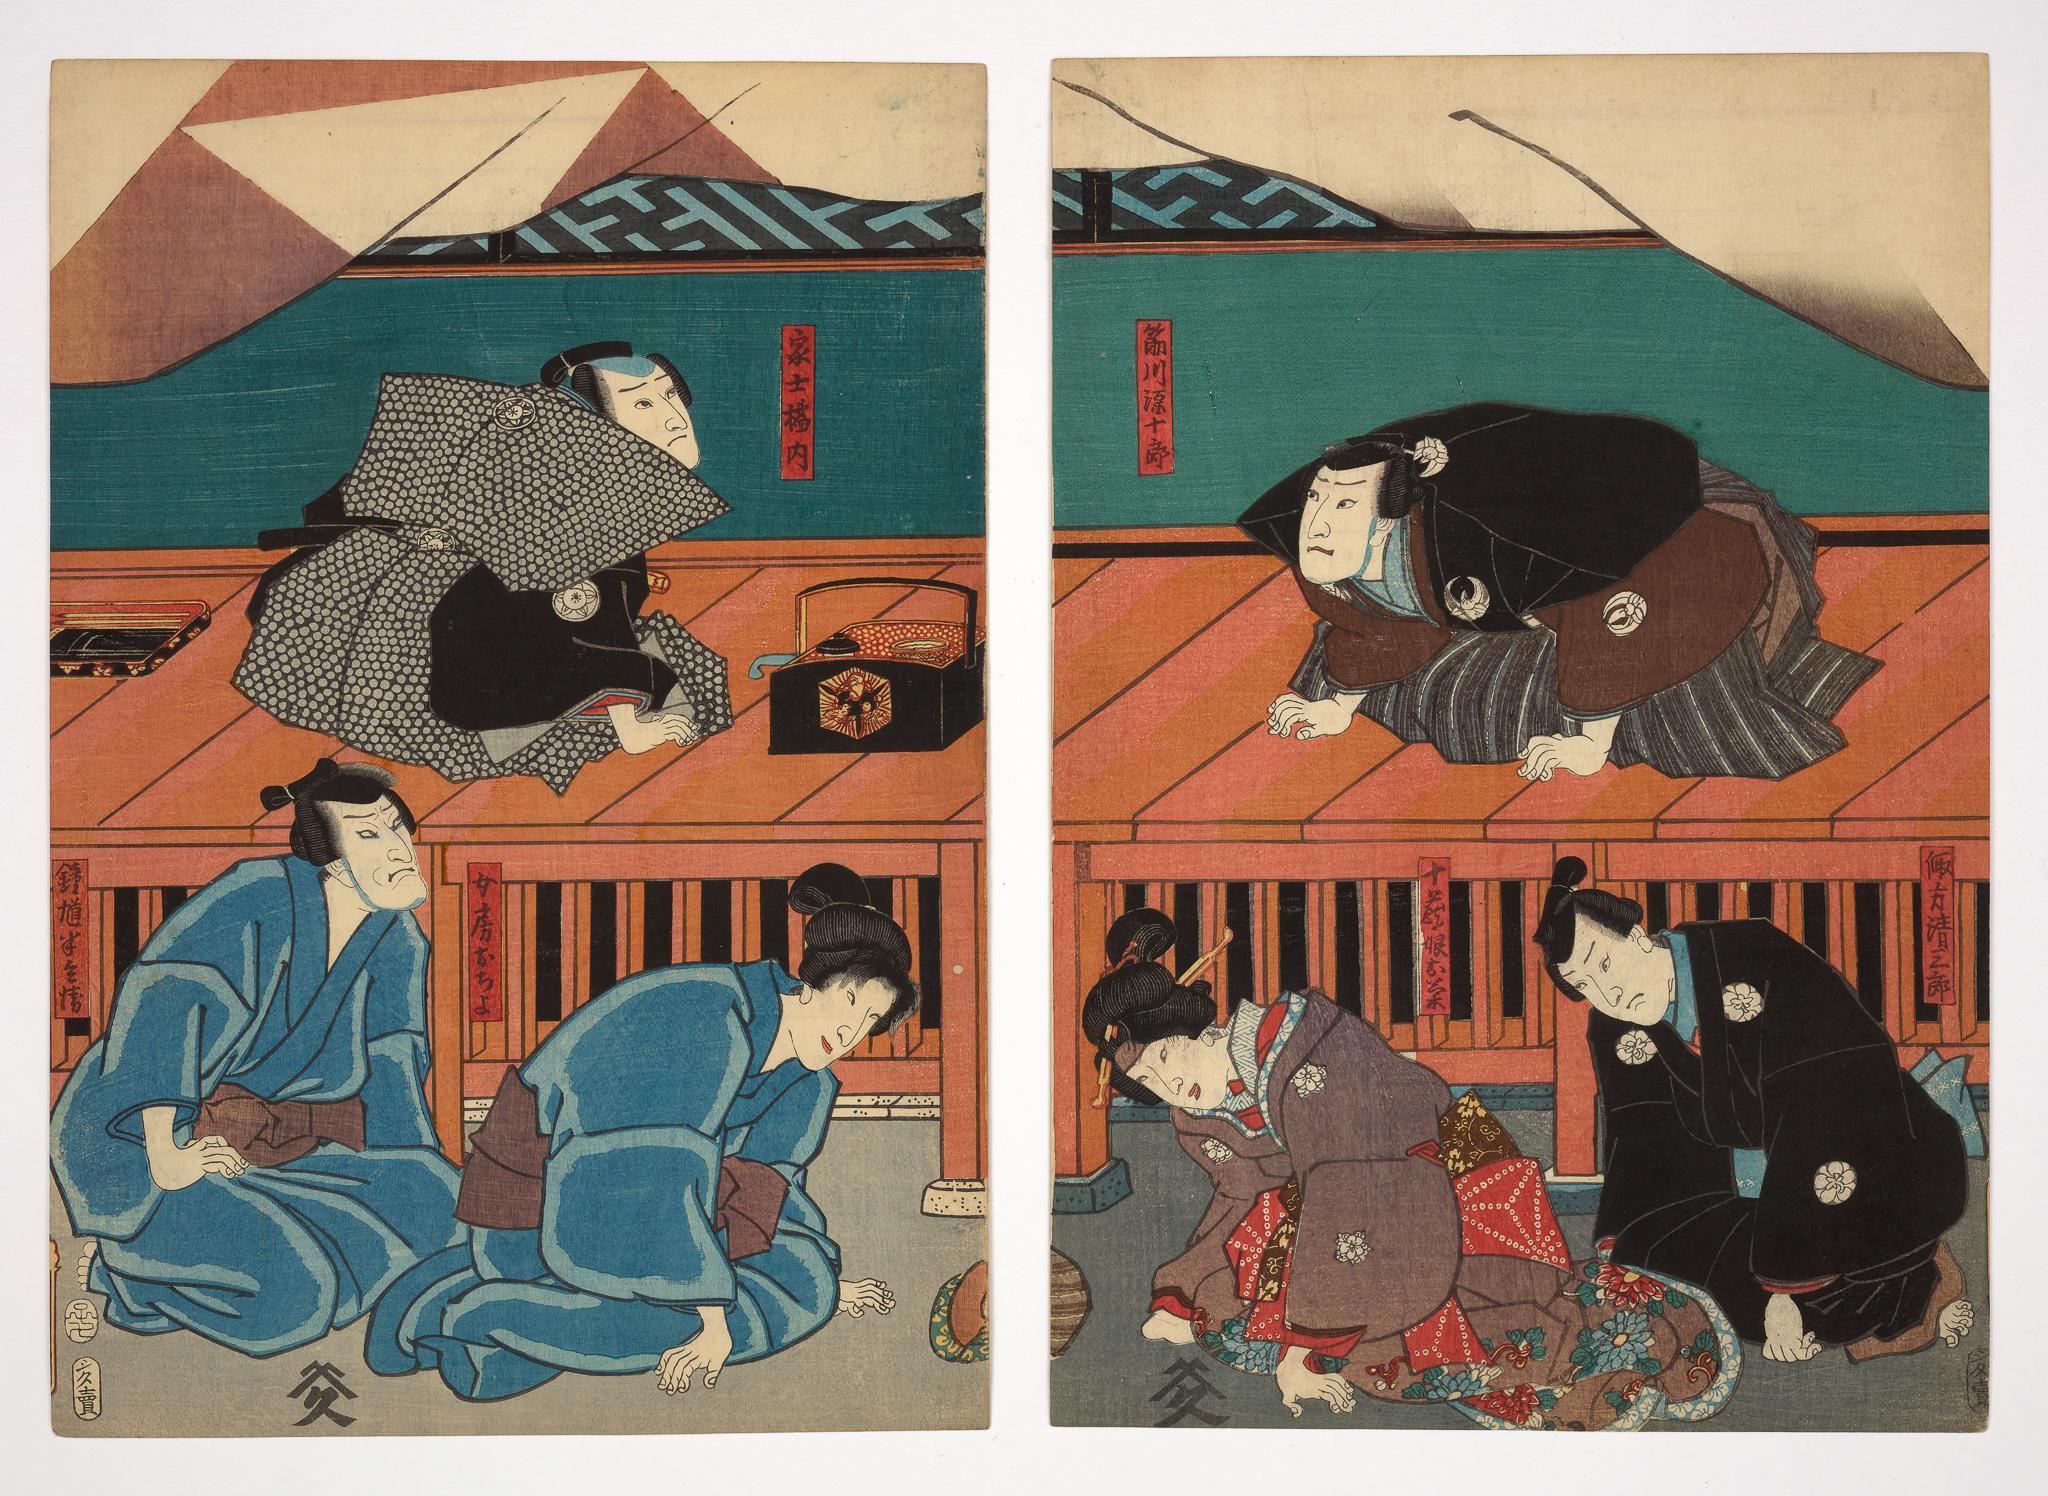 Original Japanese woodblock print - 19th century